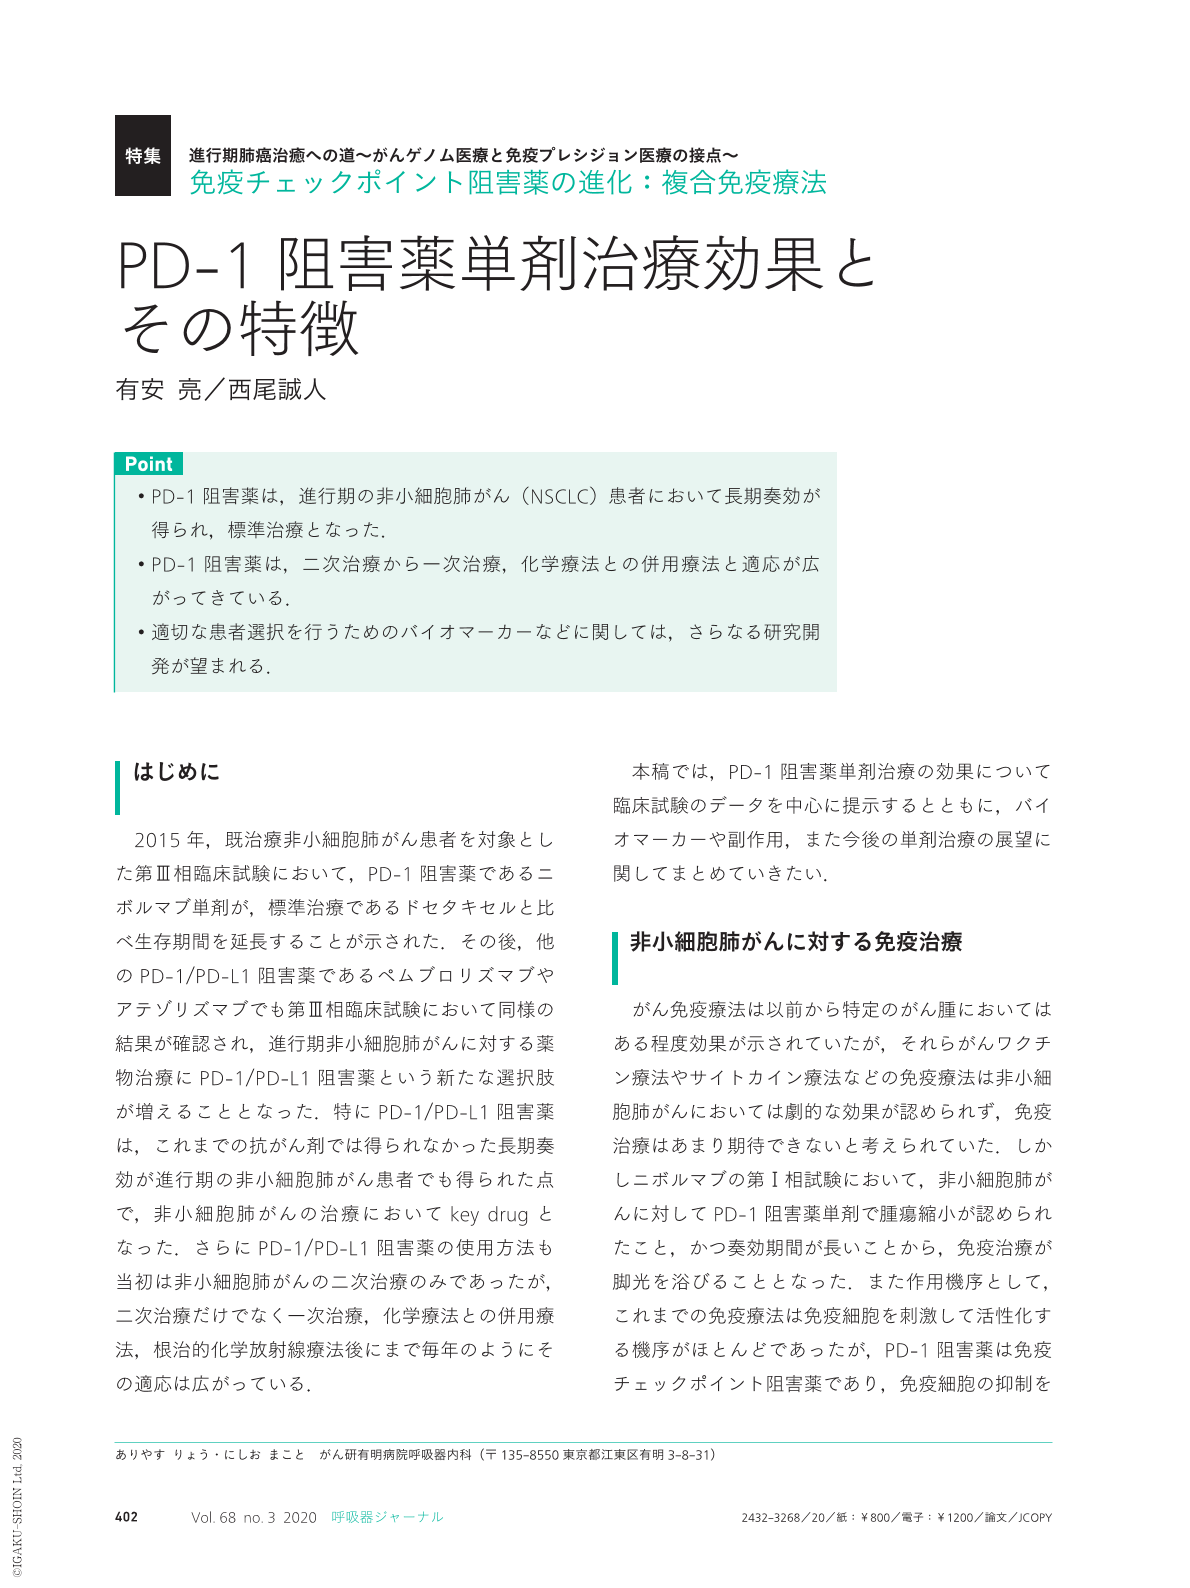 Pd 1阻害薬単剤治療効果とその特徴 呼吸器ジャーナル 68巻3号 医書 Jp